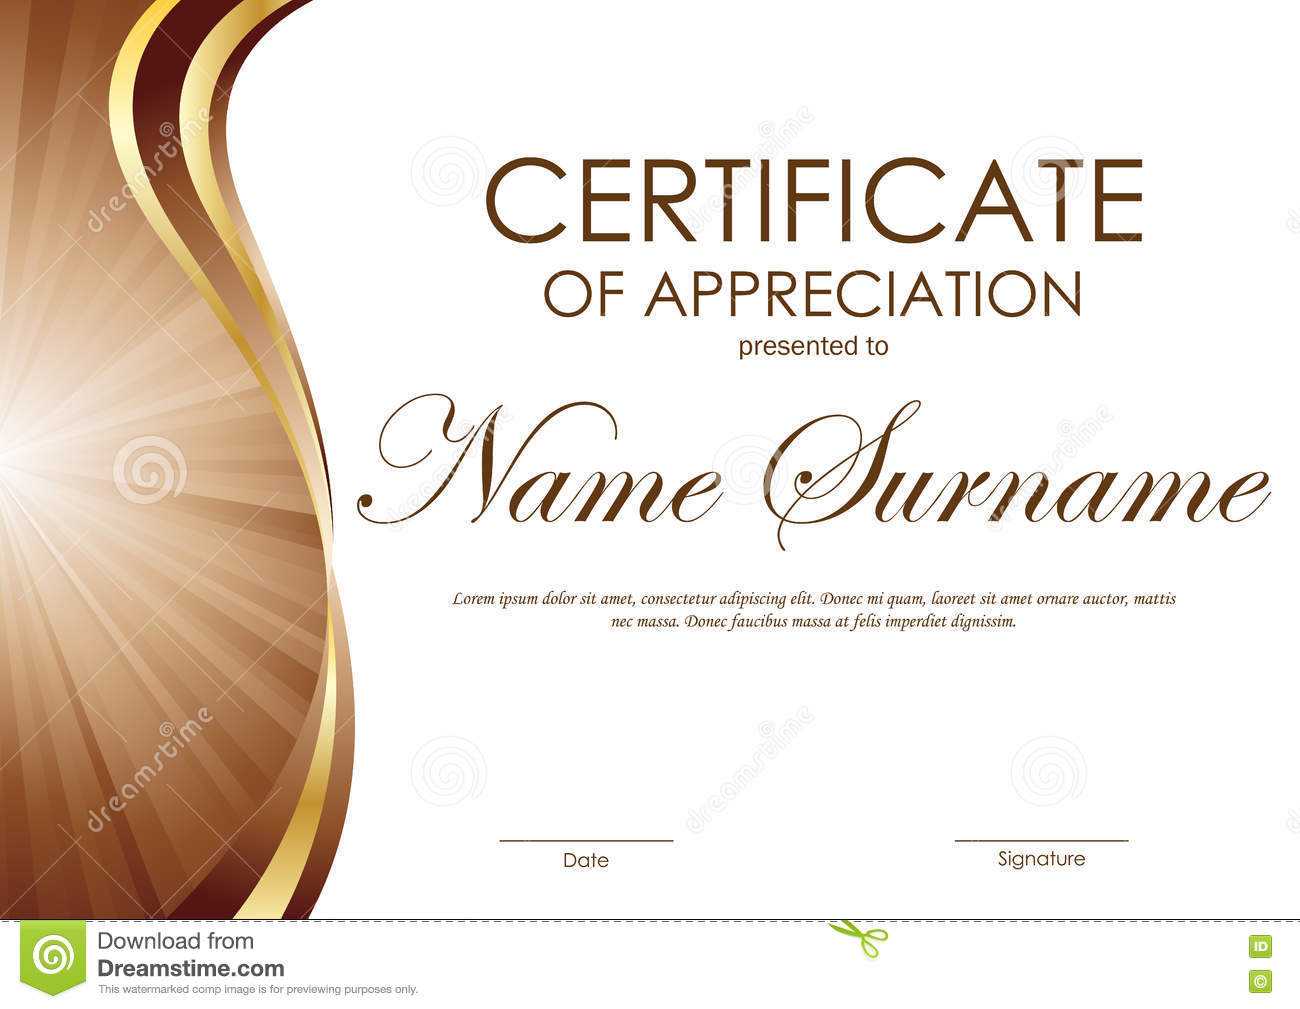 Certificate Of Appreciation Template Stock Vector With Regard To Free Certificate Of Appreciation Template Downloads